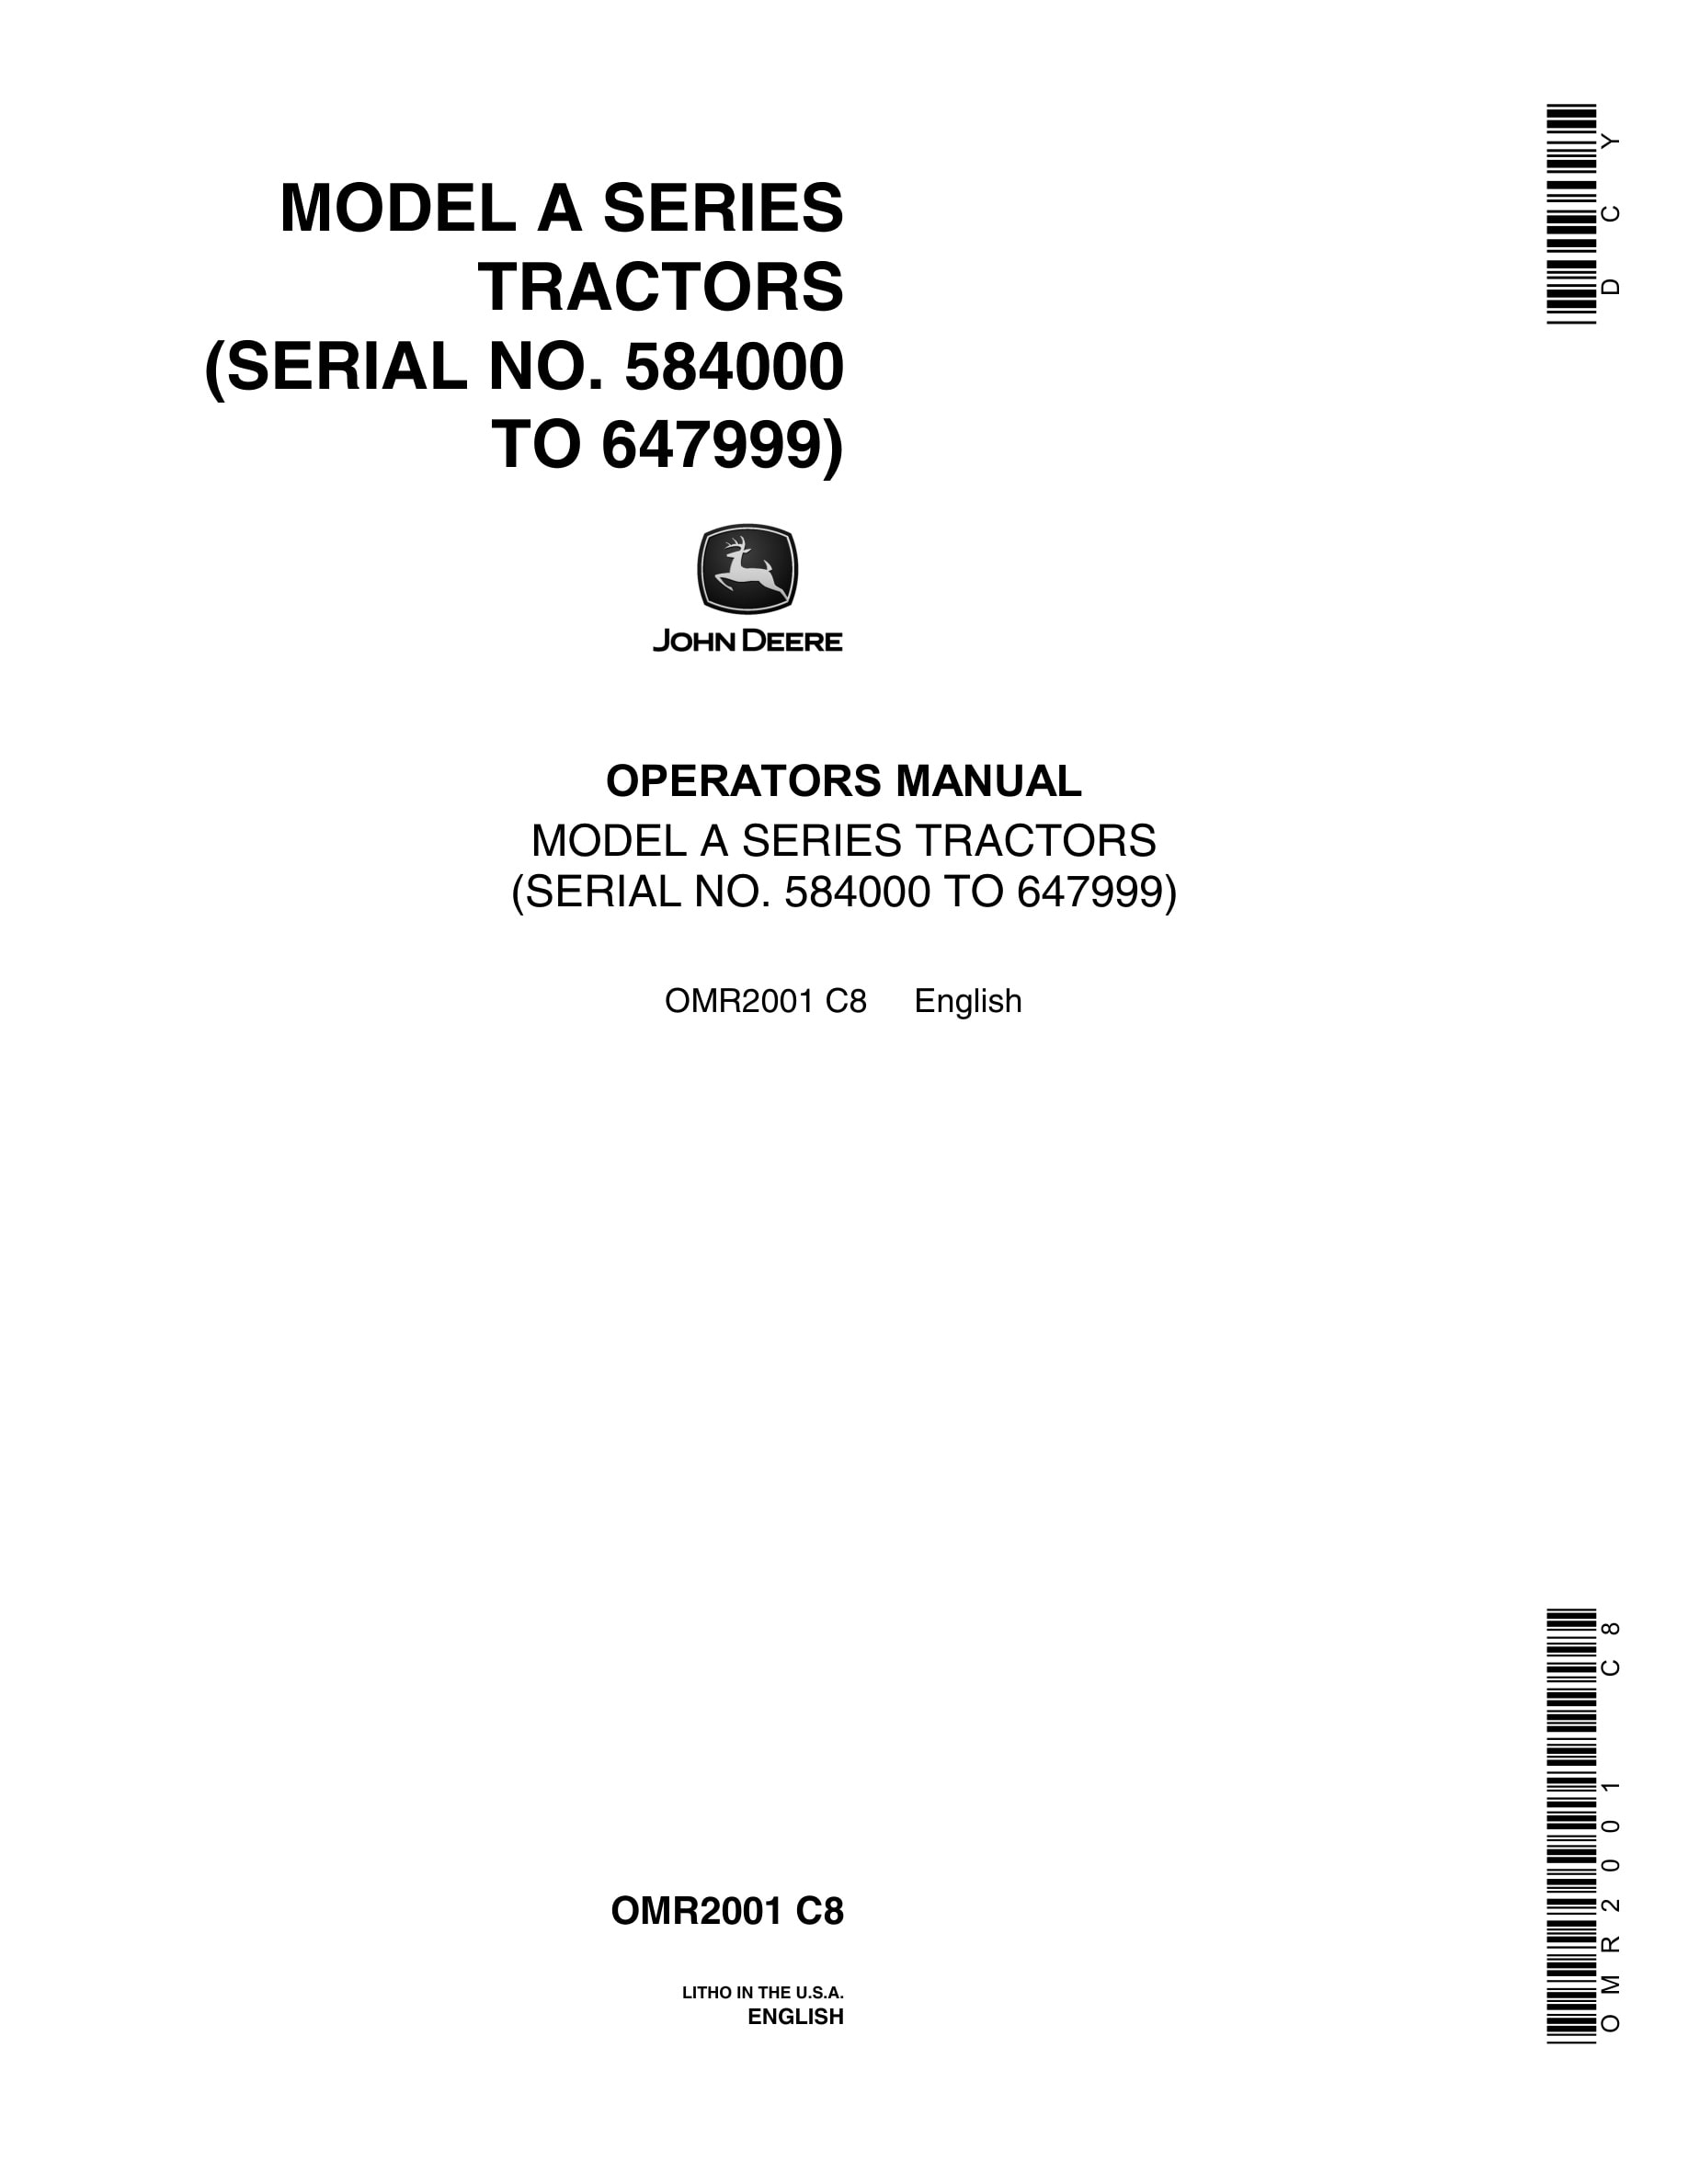 John Deere Model A Tractor Operator Manual OMR2001-1